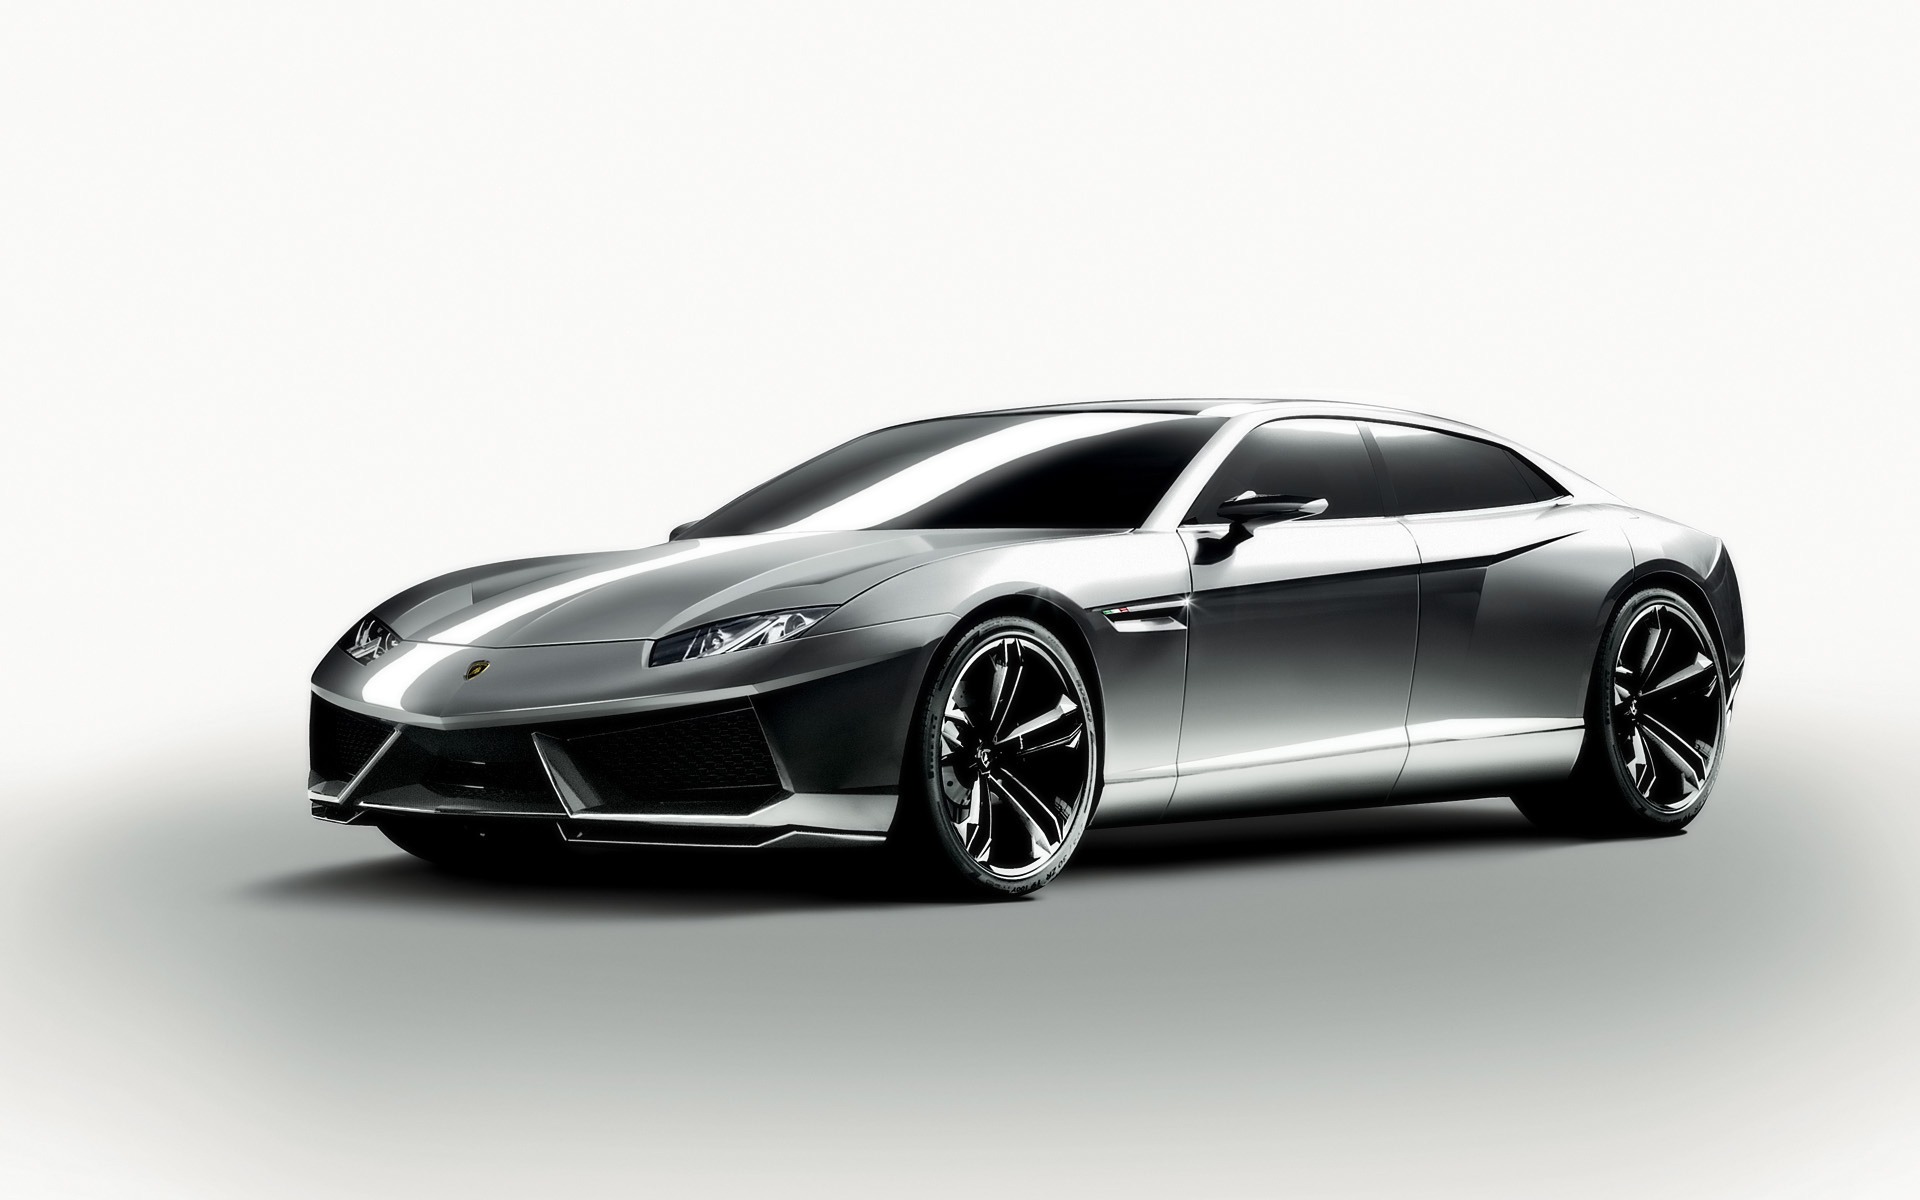 Télécharger des fonds d'écran Lamborghini Estoque HD